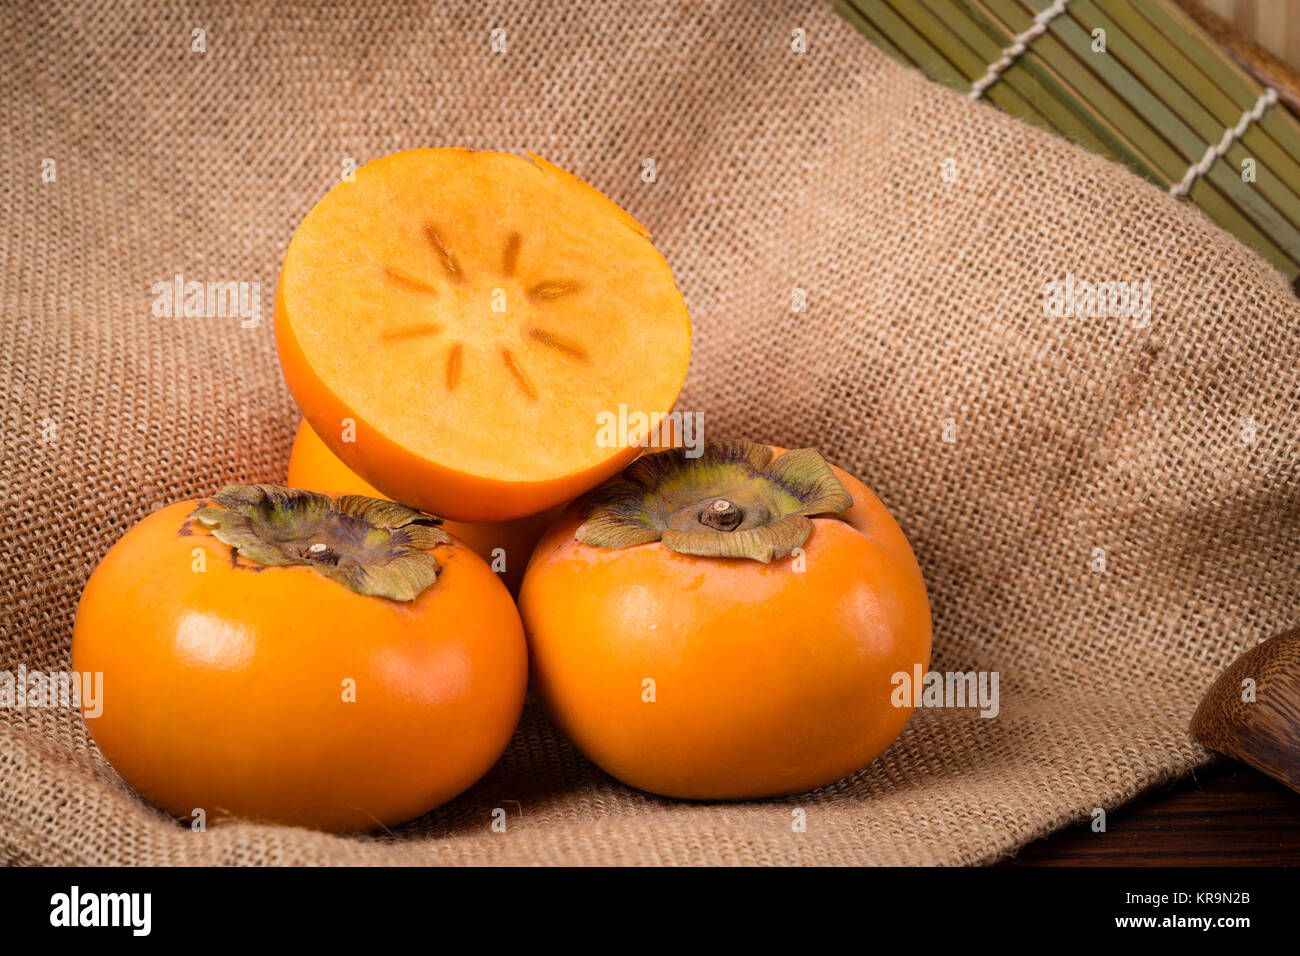 Organic and fresh persimmons Stock Photo